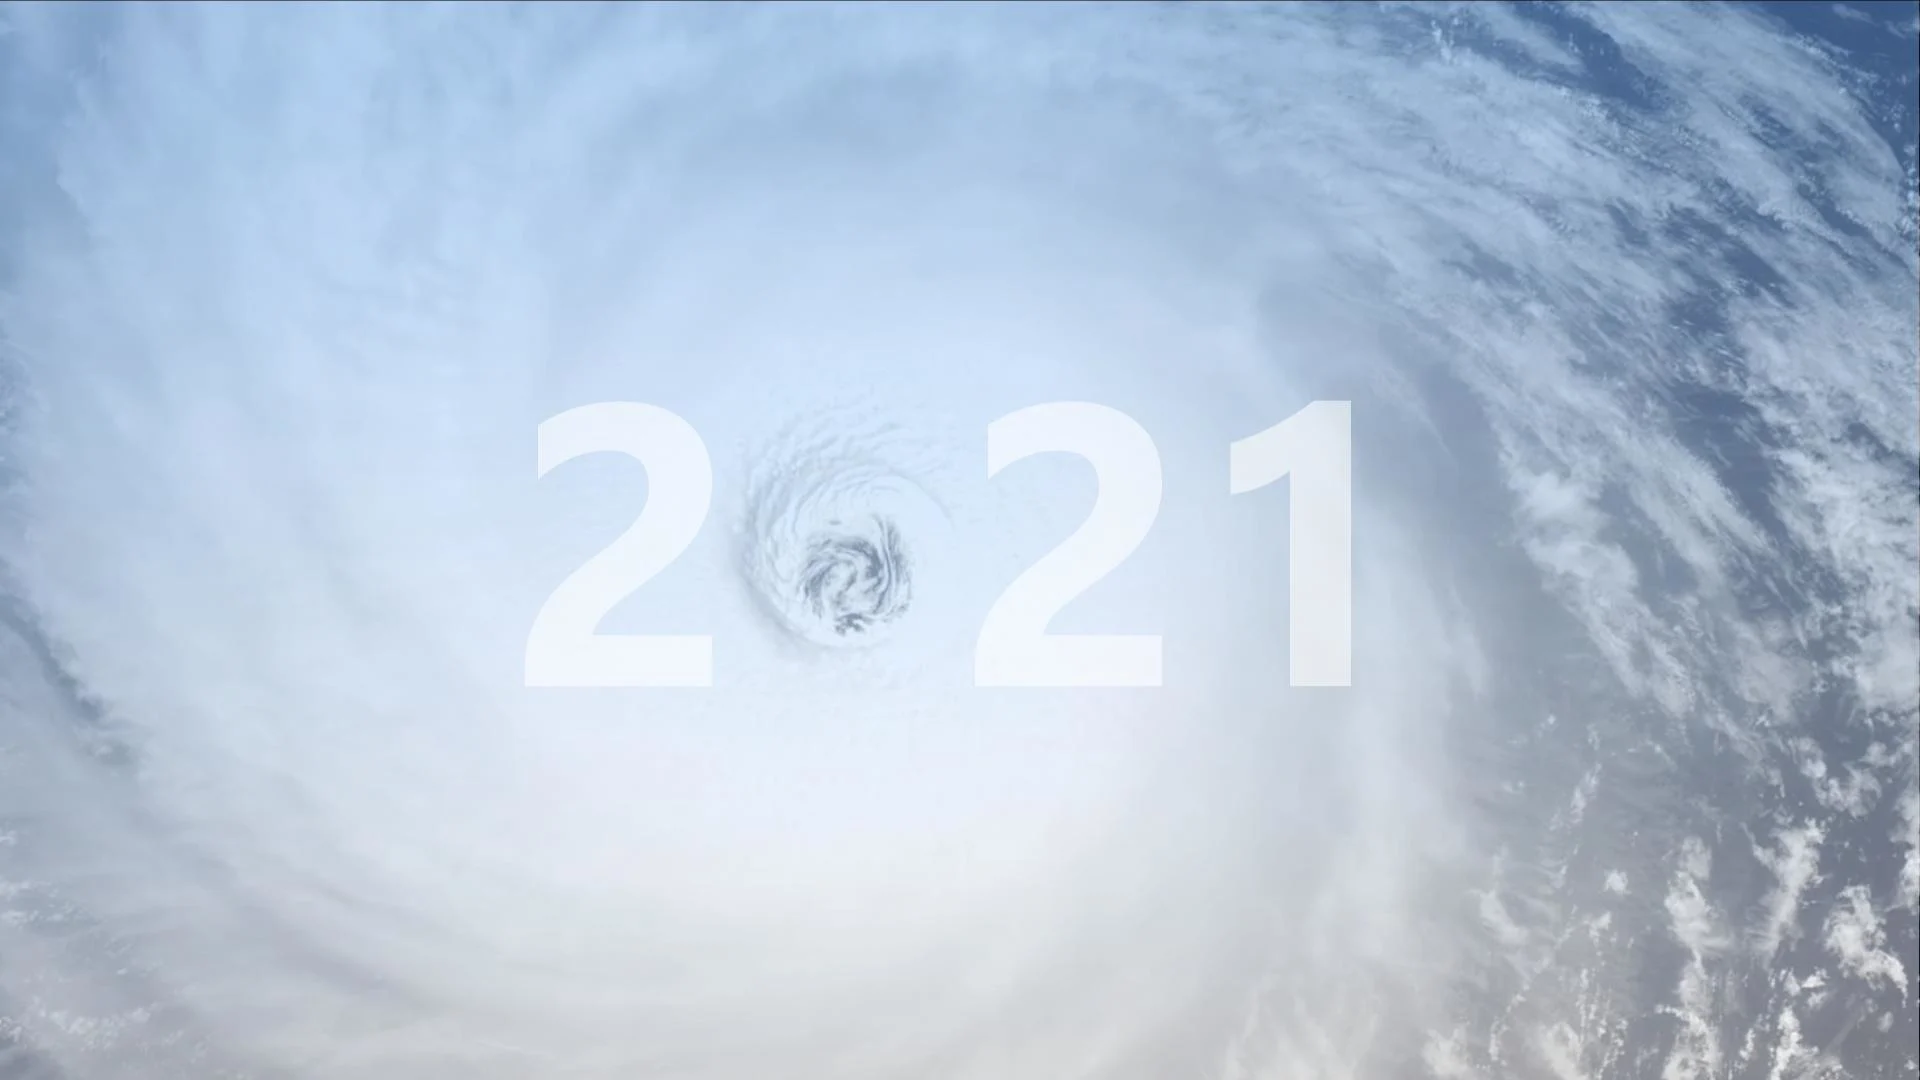 Experts predict above average 2021 Atlantic hurricane season